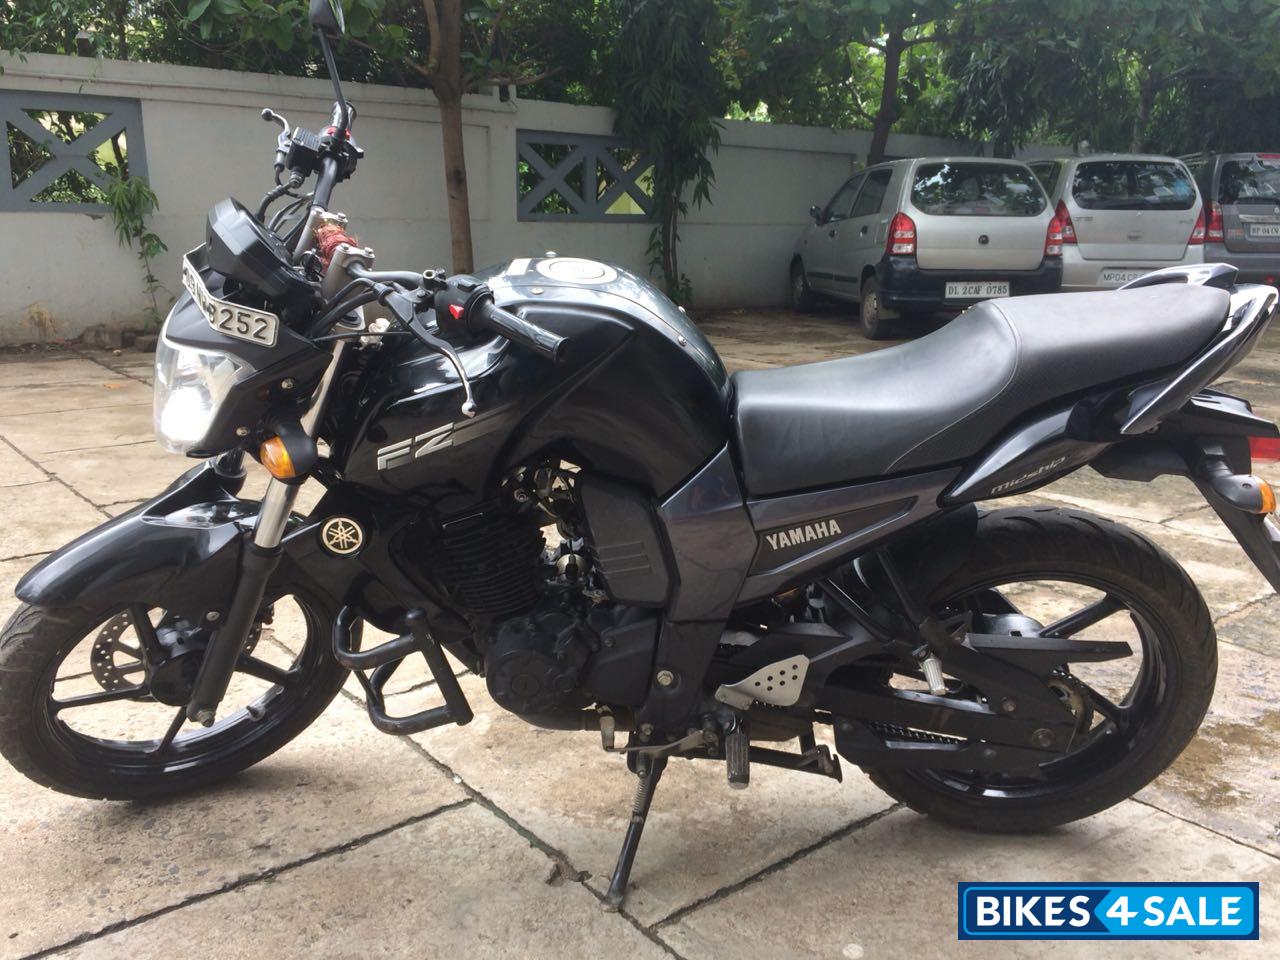 Used 2013 model Yamaha FZ16 for sale in Bhopal. ID 181376 - Bikes4Sale